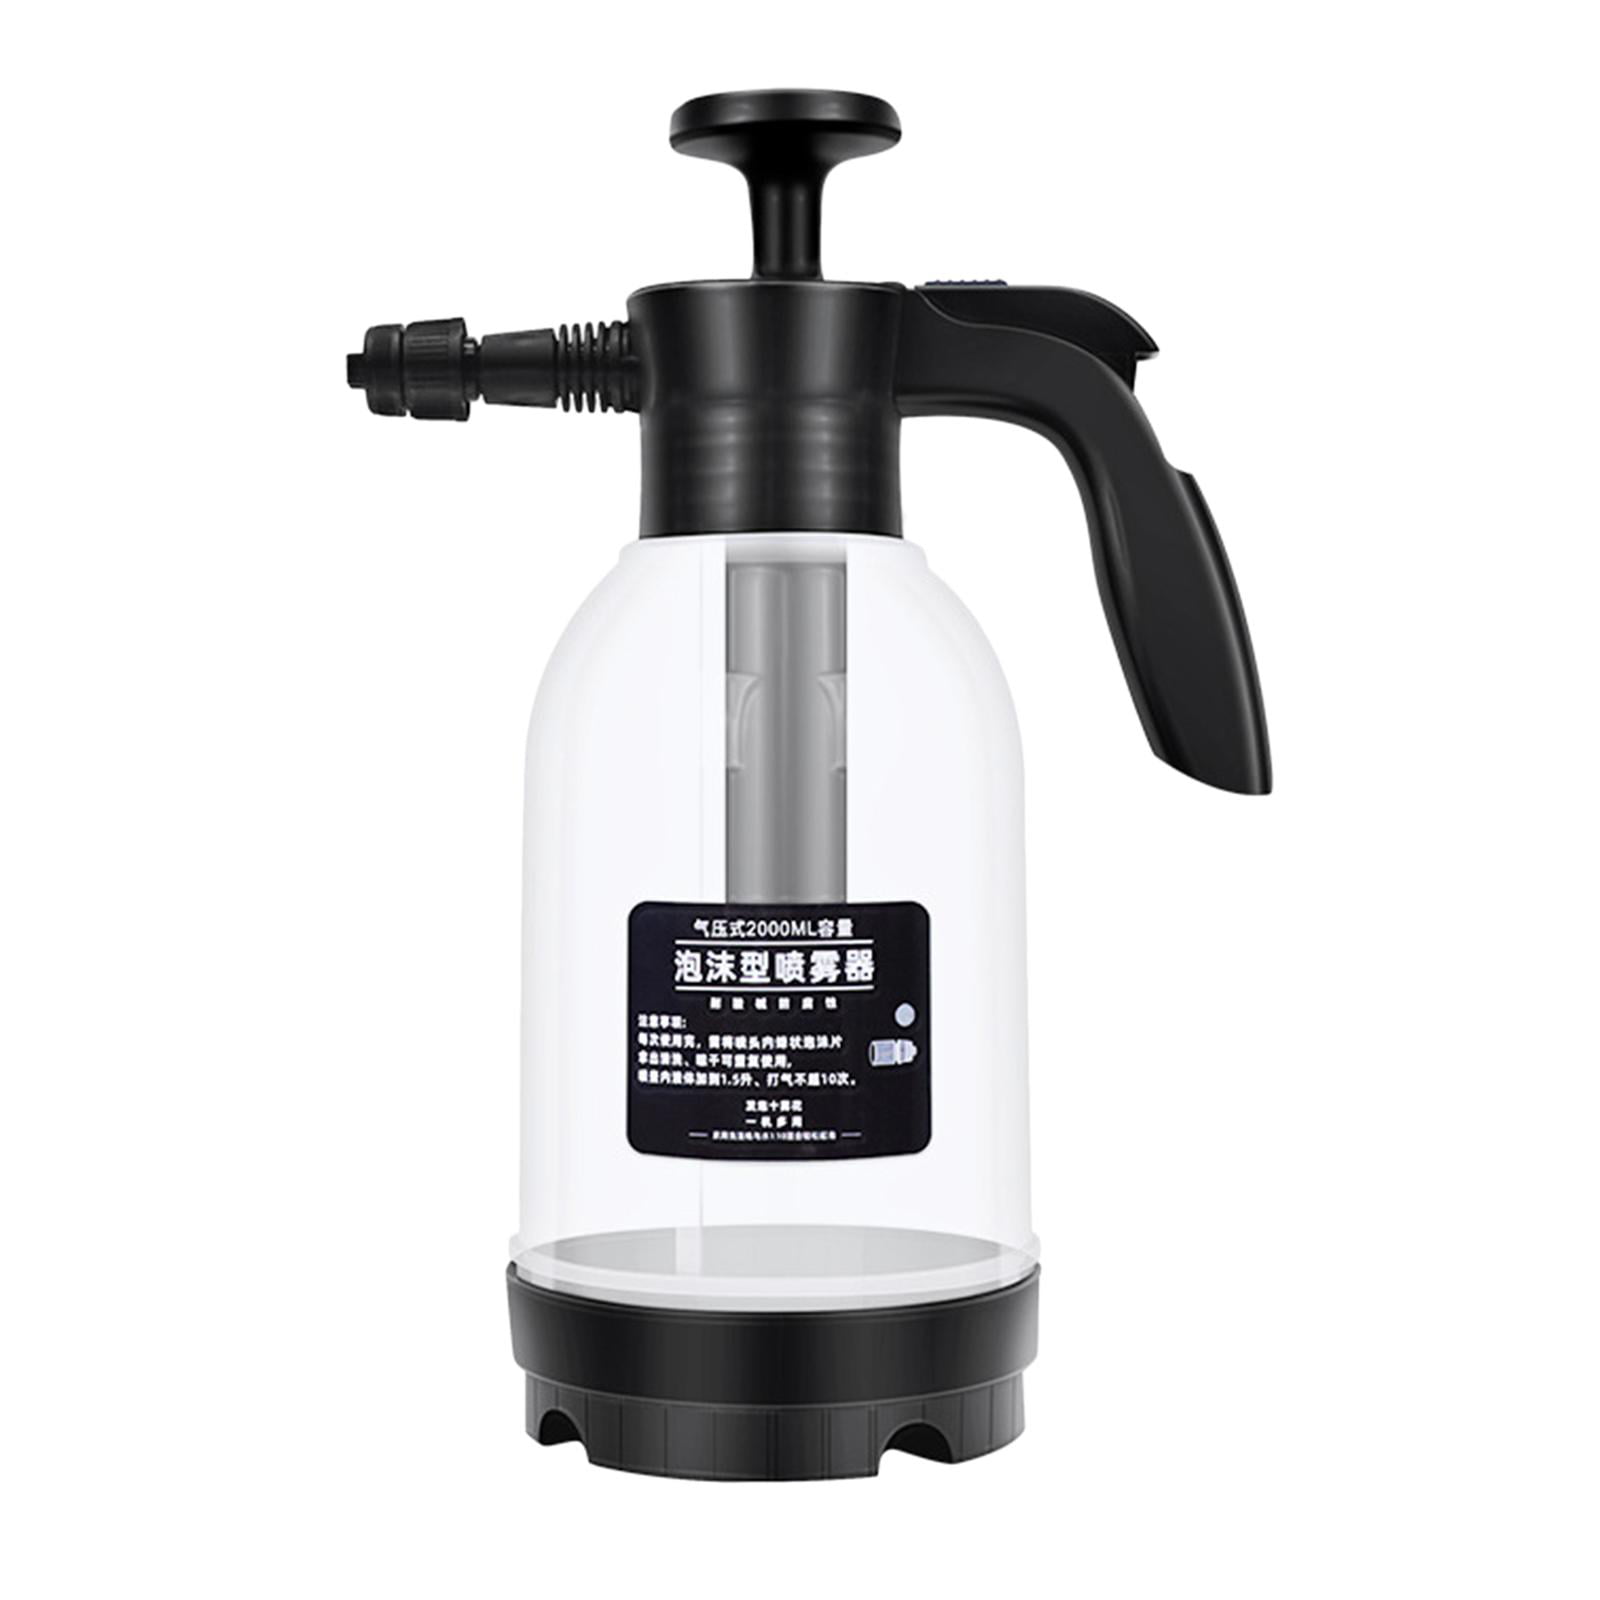 FOSHIO Car Wash Foam Pump Sprayer 0.4 Gallon, Hand Pump Pressure Sprayer  with Trigger Lock Water Sprayer for Car Detailing, Lawn and Garden